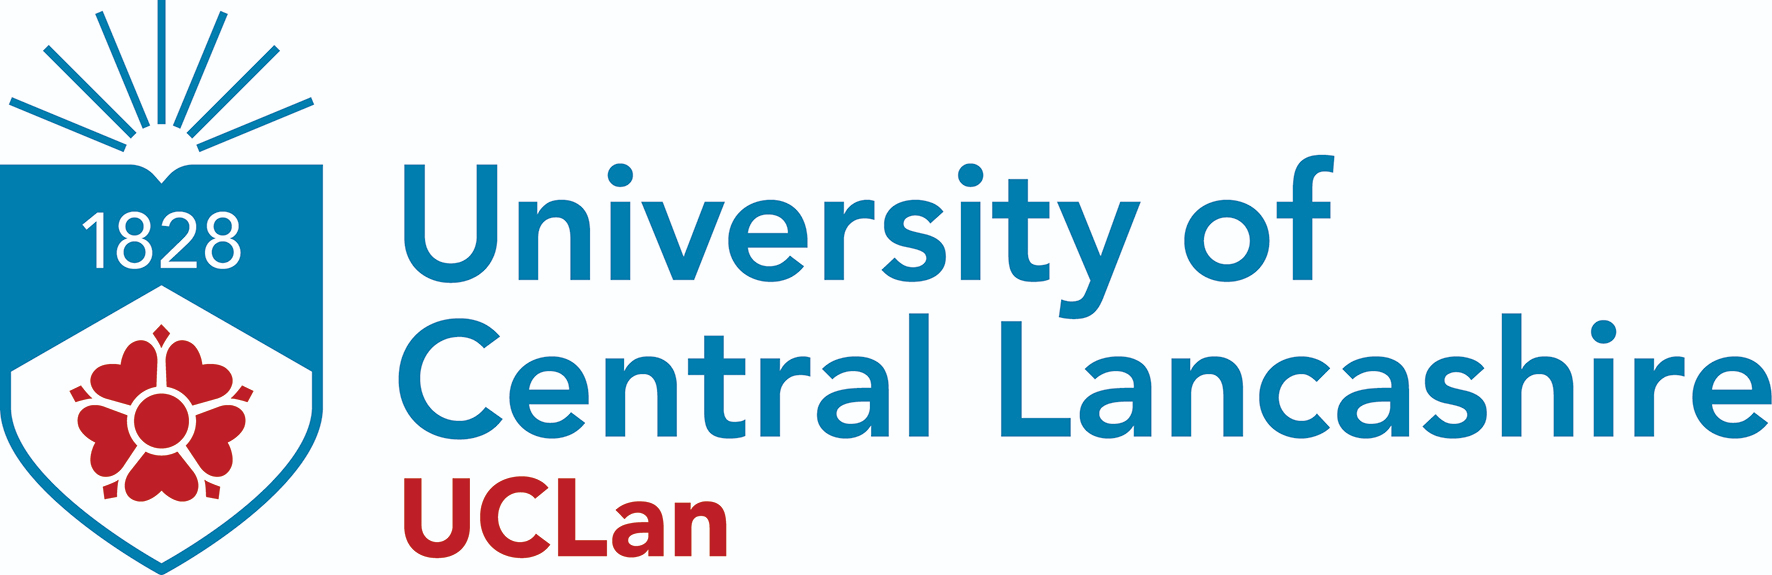 University of Central Lancashire logo 